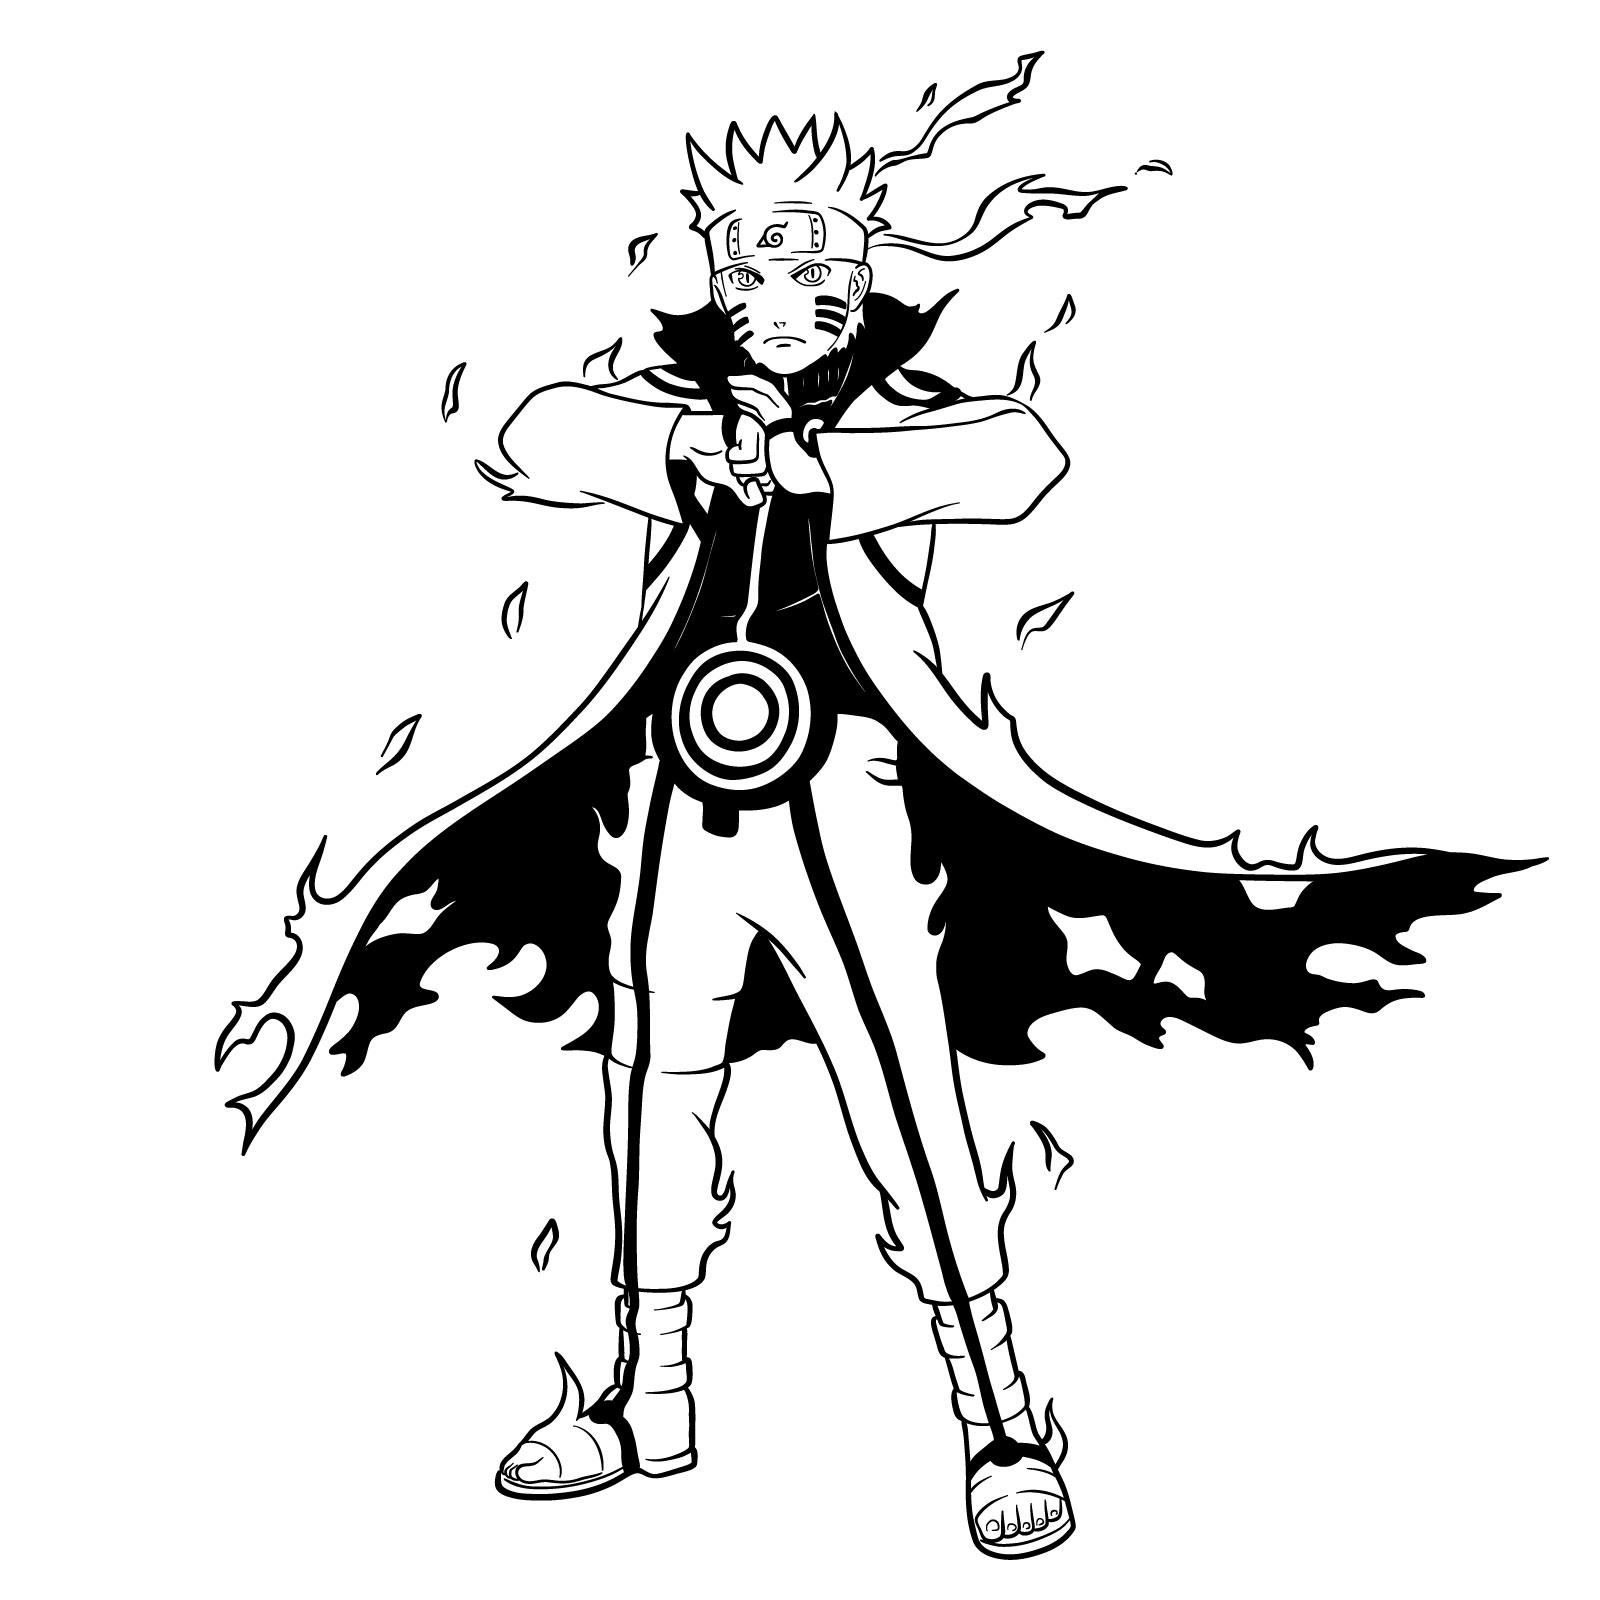 How to draw Naruto in Kurama Mode - final step